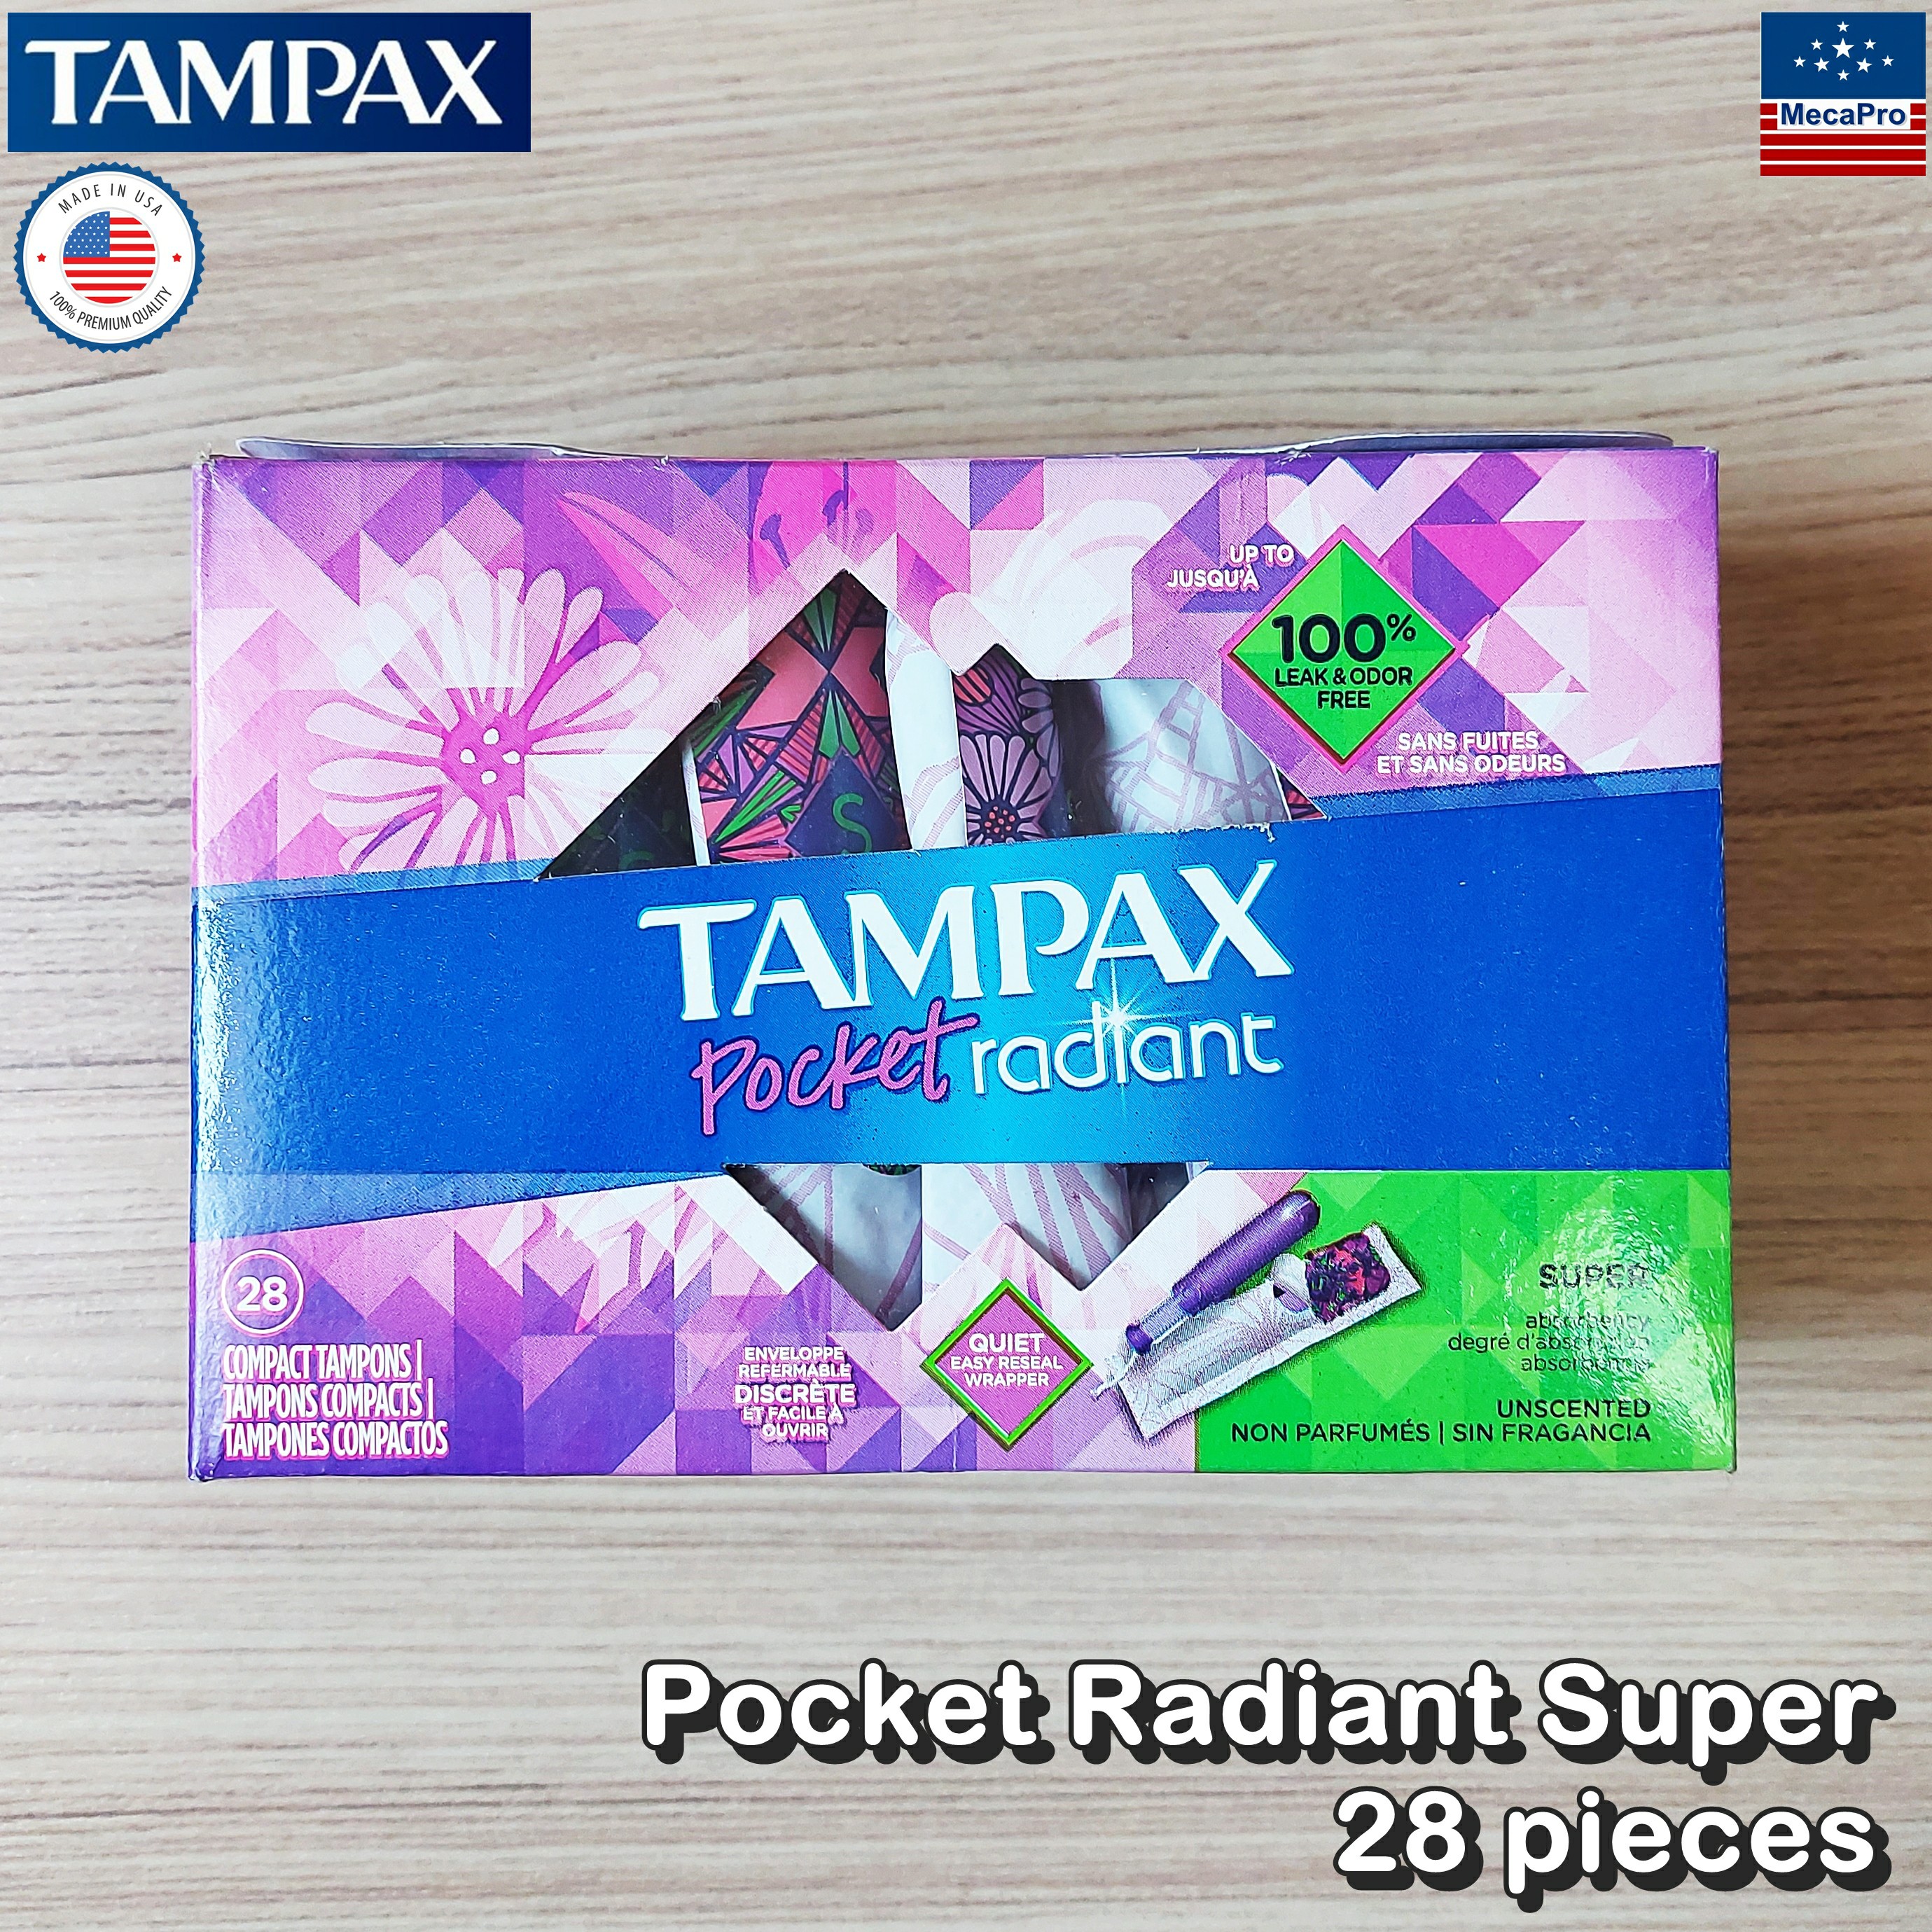 Tampax® Pocket Radiant Super Plastic Tampons 28 pieces ผ้าอนามัยแบบสอด 28 ชิ้น เหมาะกับวันมามาก